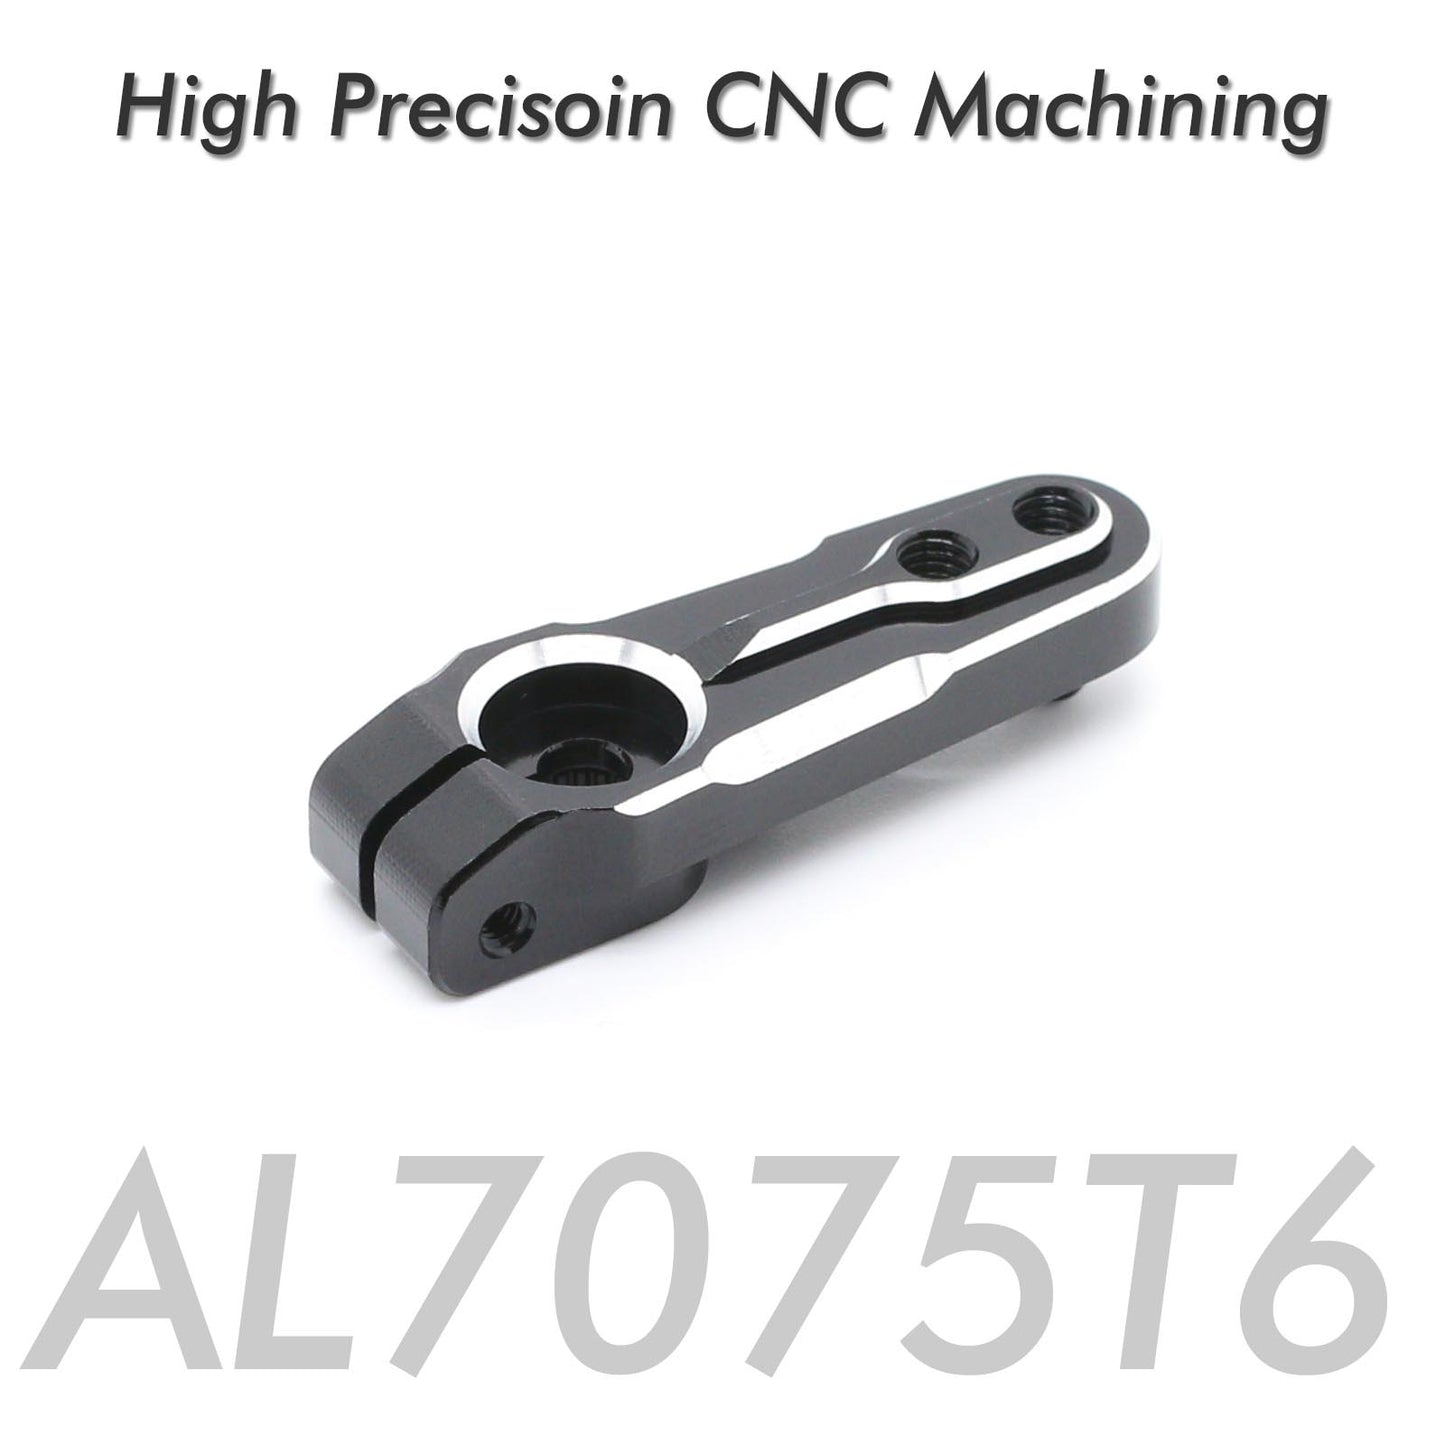 Sincecam 25T AL7075 Metal Servo Horn Aluminum Steering Arm for 1/8 1/10 1/12 Scales RC Models -2 Pack